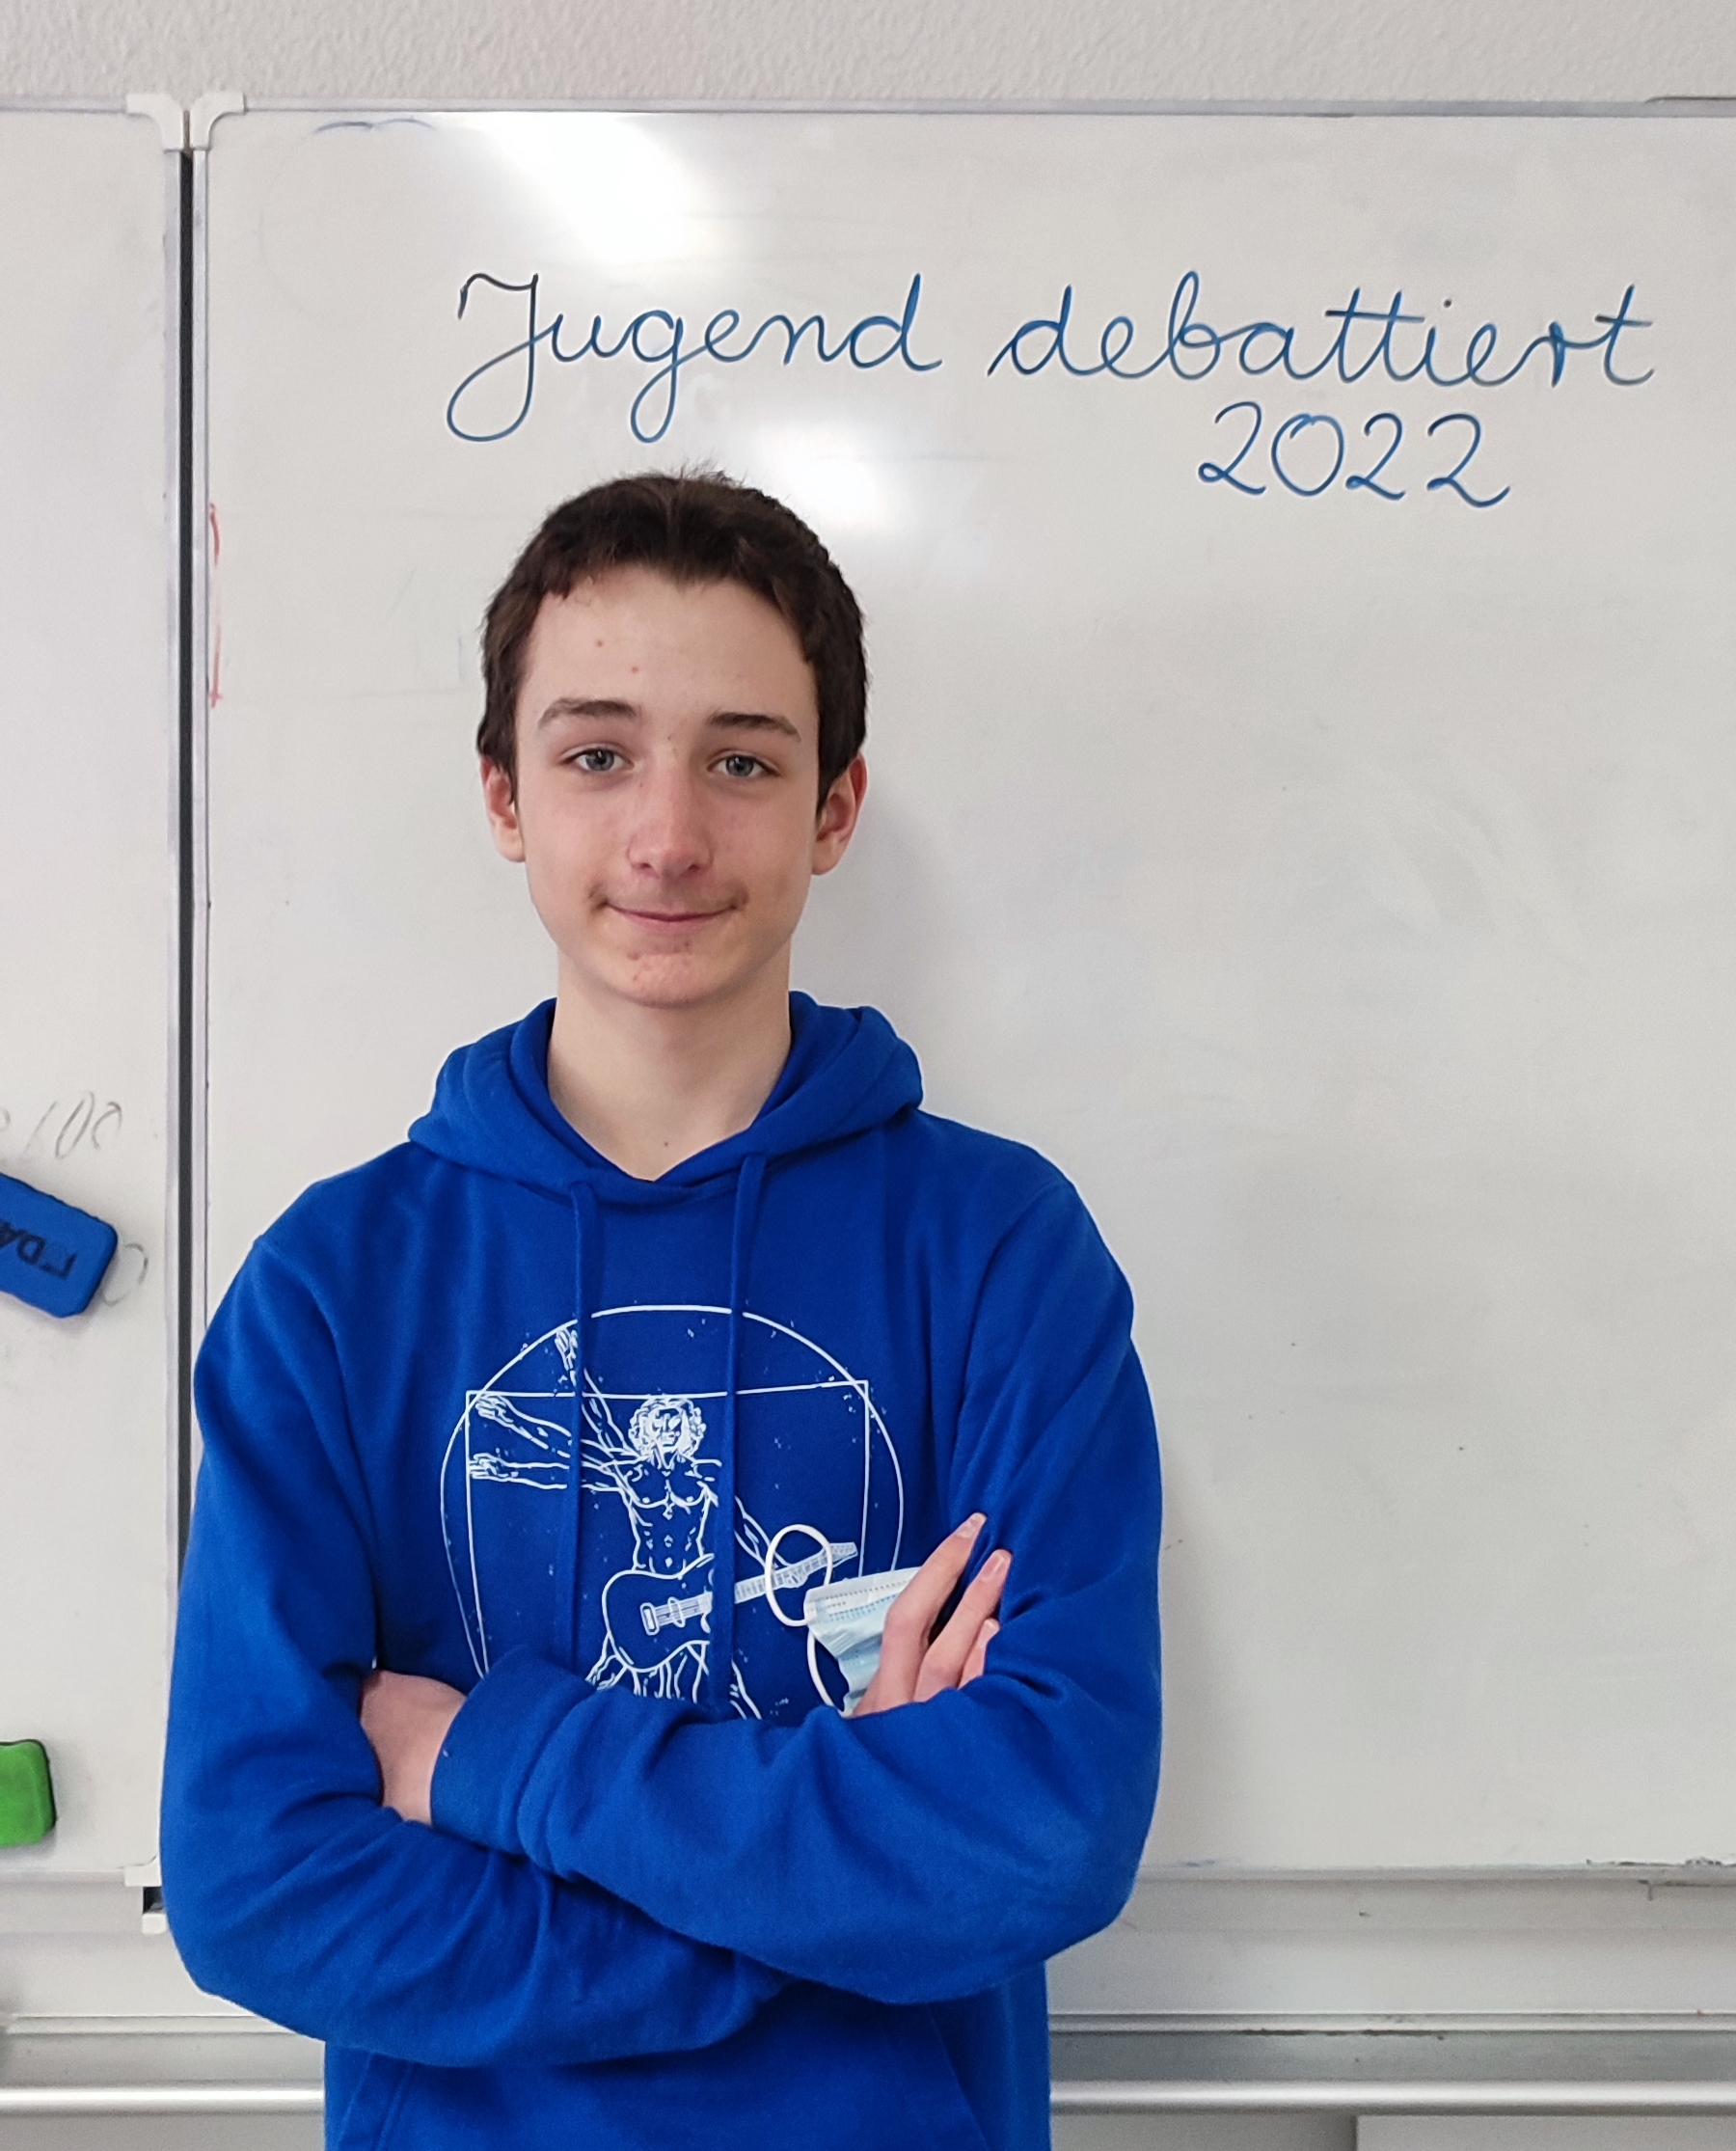 Jugend debattiert 2022